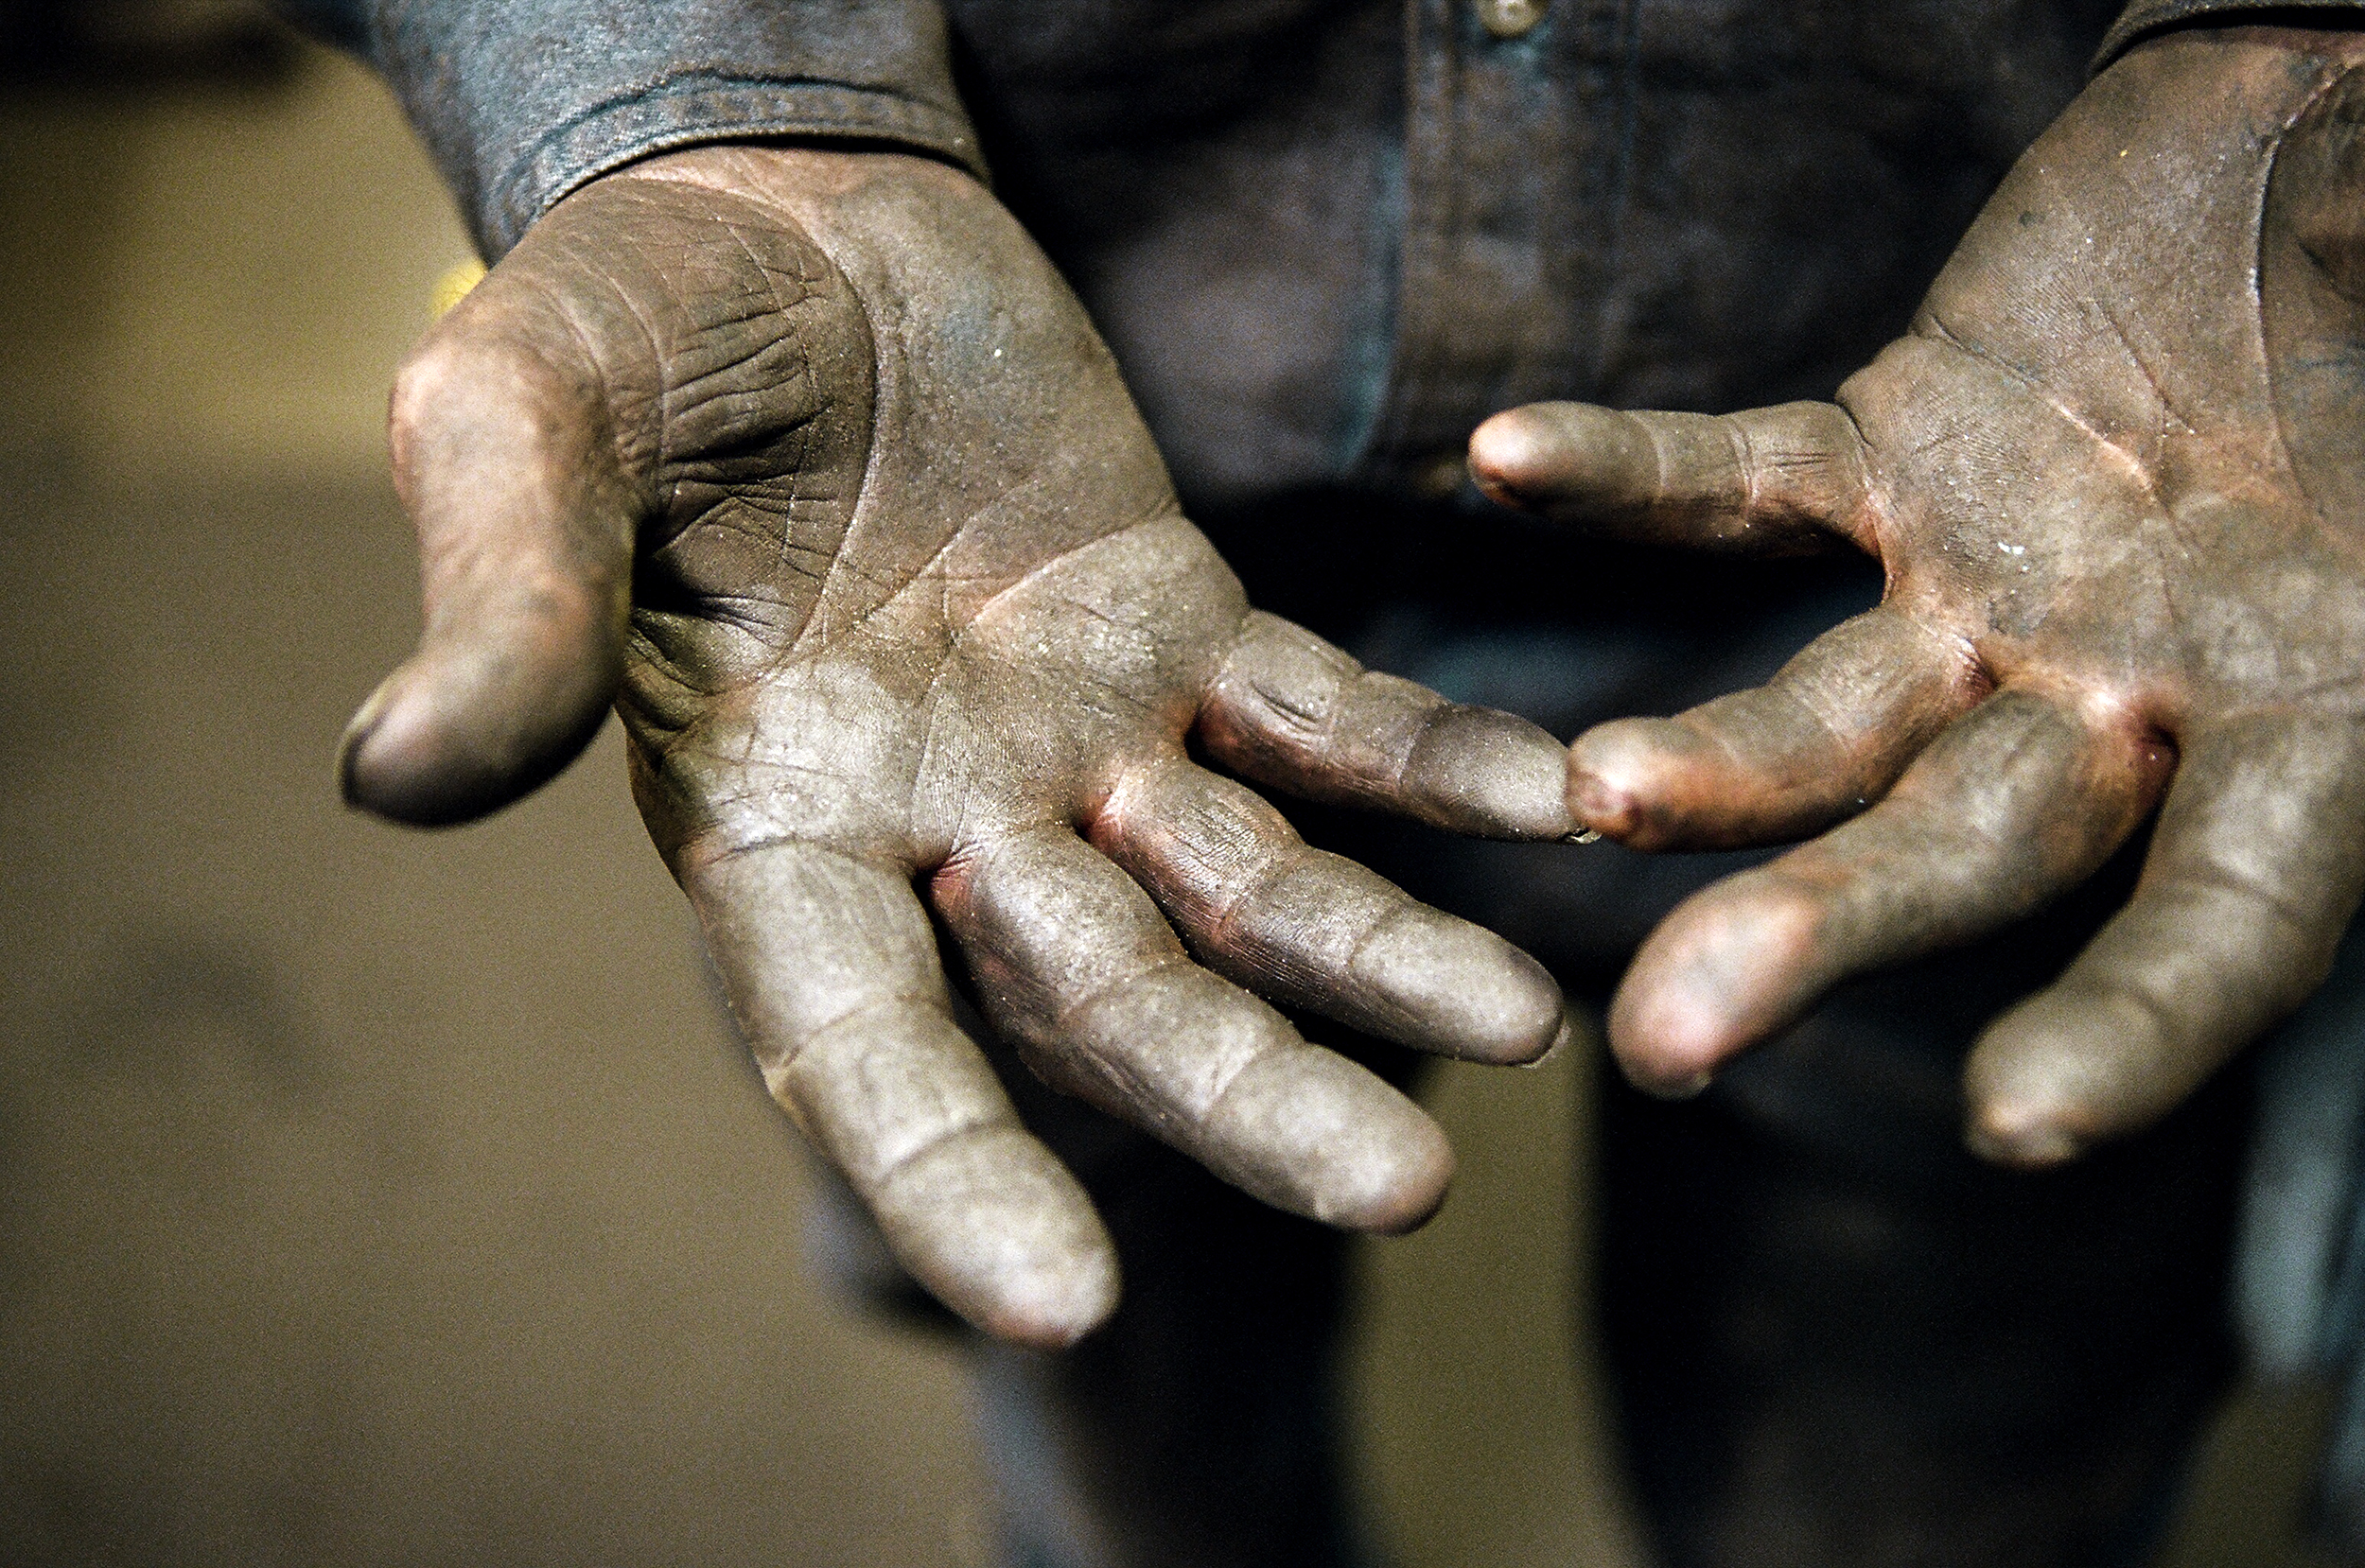 Dirty hands at a hanger factory.